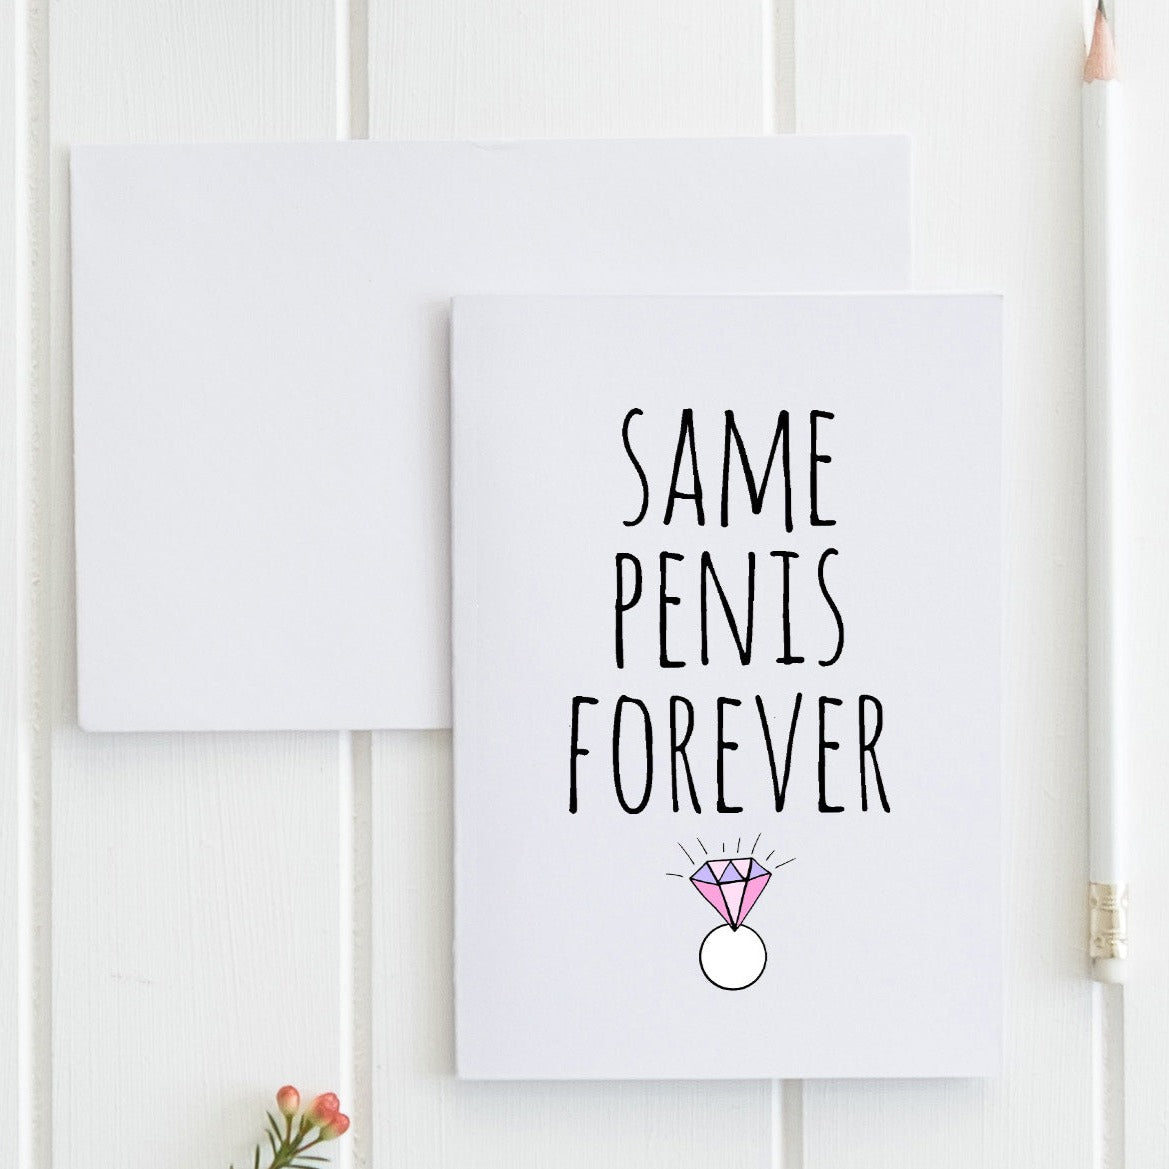 Same Penis Forever - Greeting Card